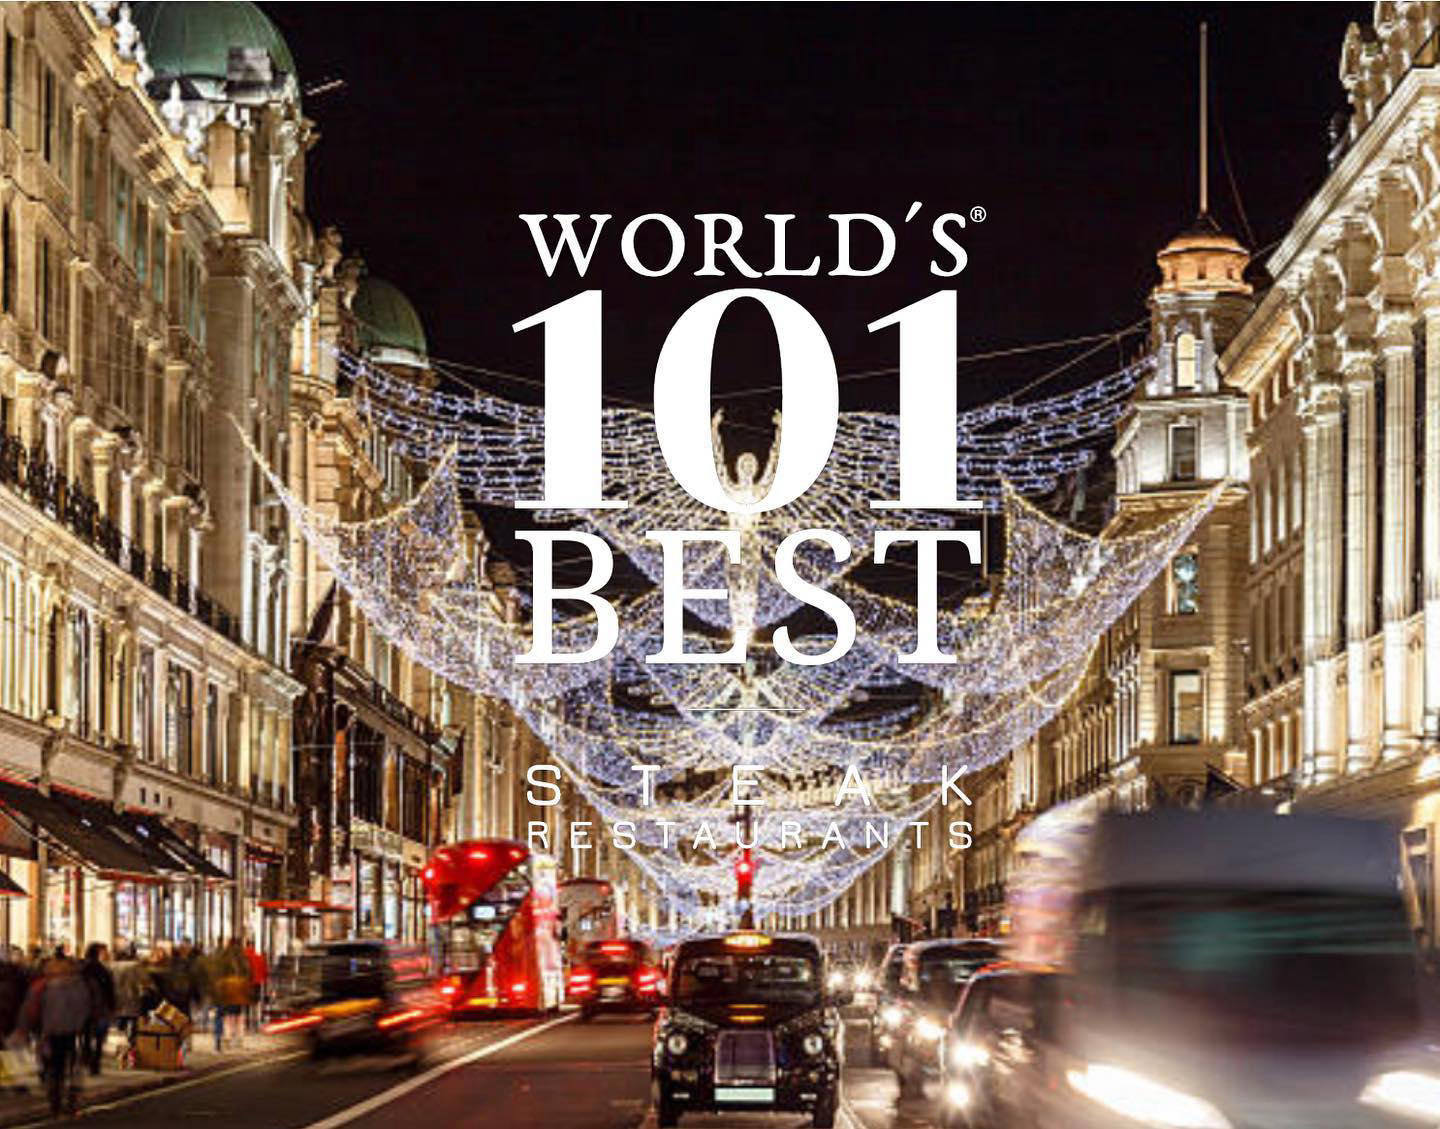 image  1 World's Best Steak Restaurants - Wishing you all a wonderful festive season and a splendid 2023